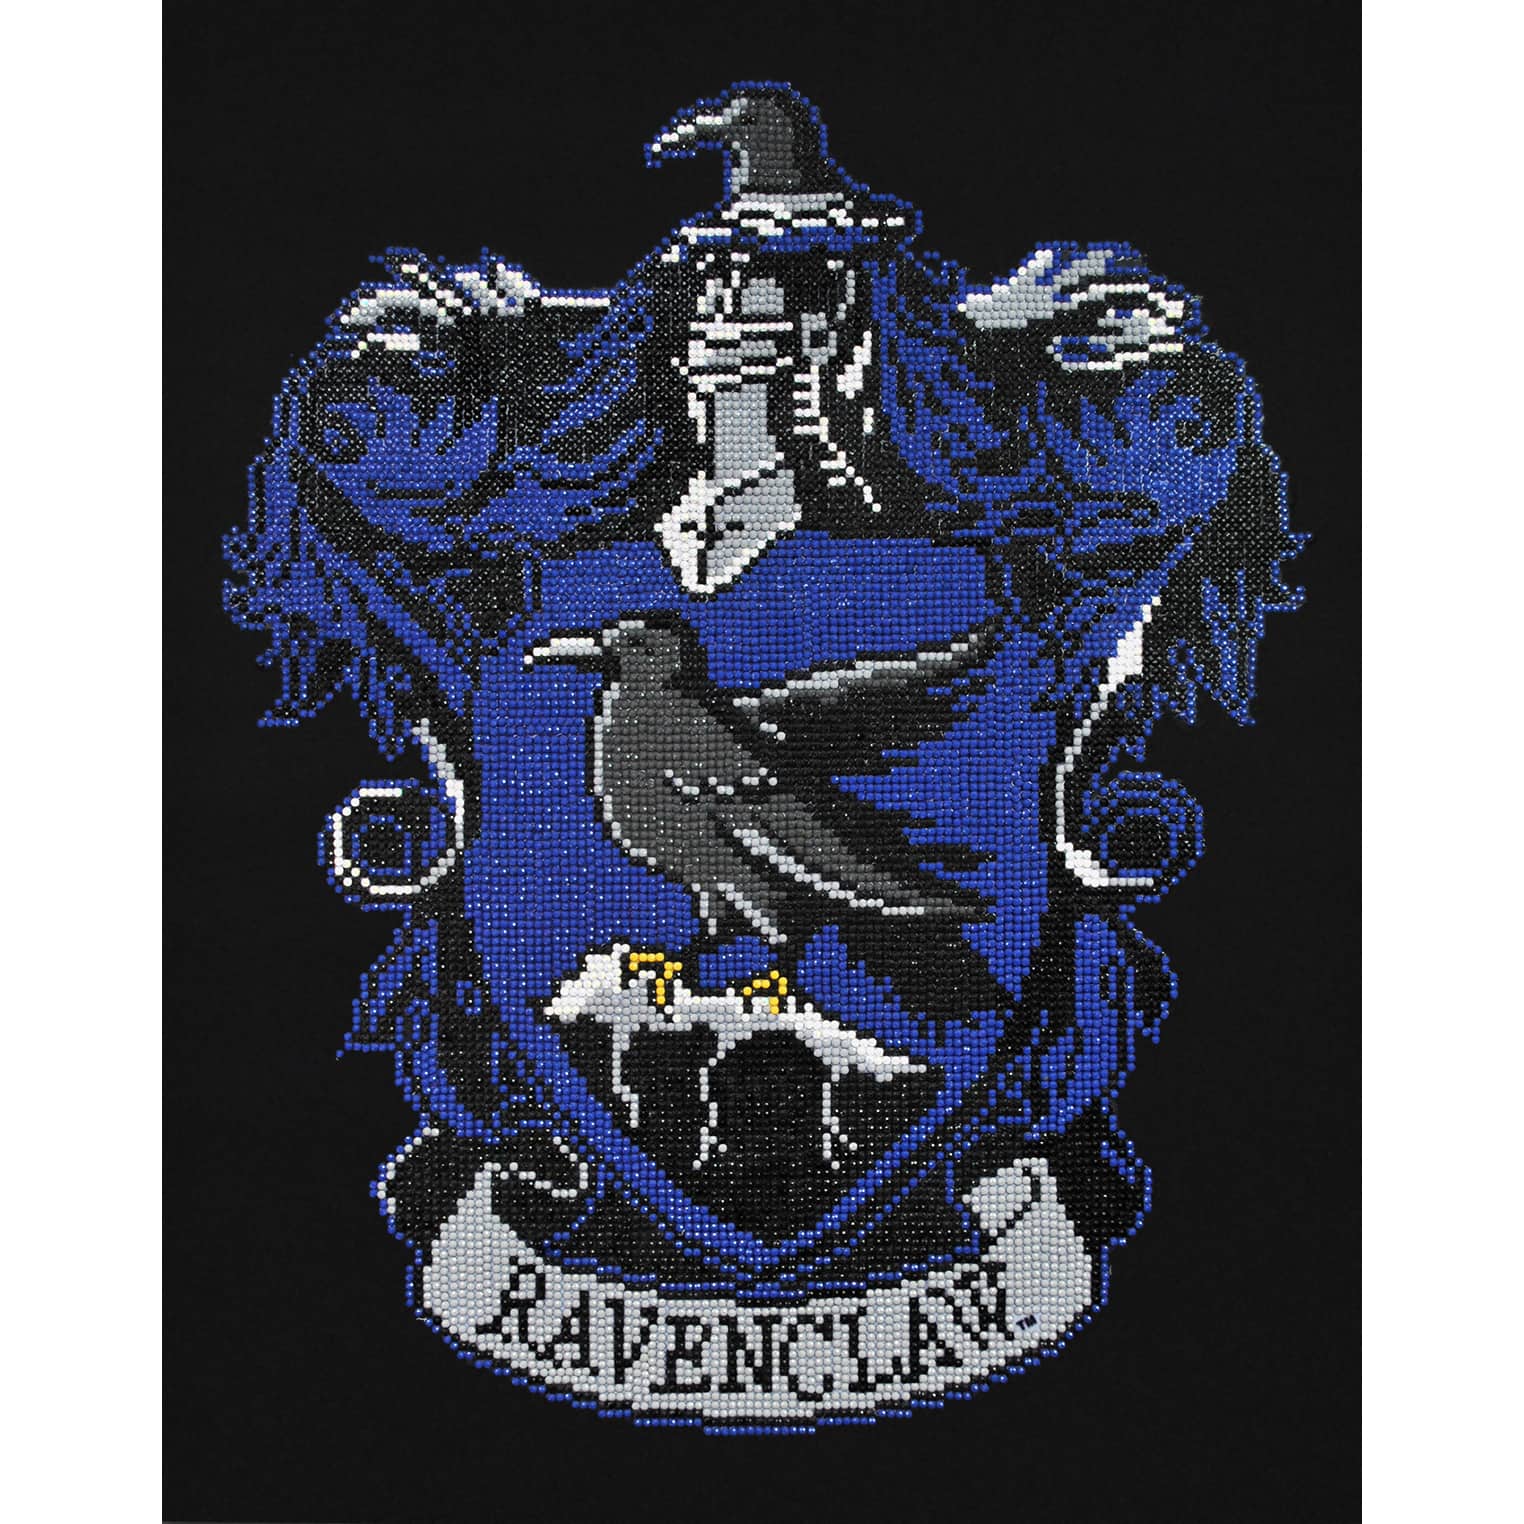 Ravenclaw Crest Sticker - harry potter